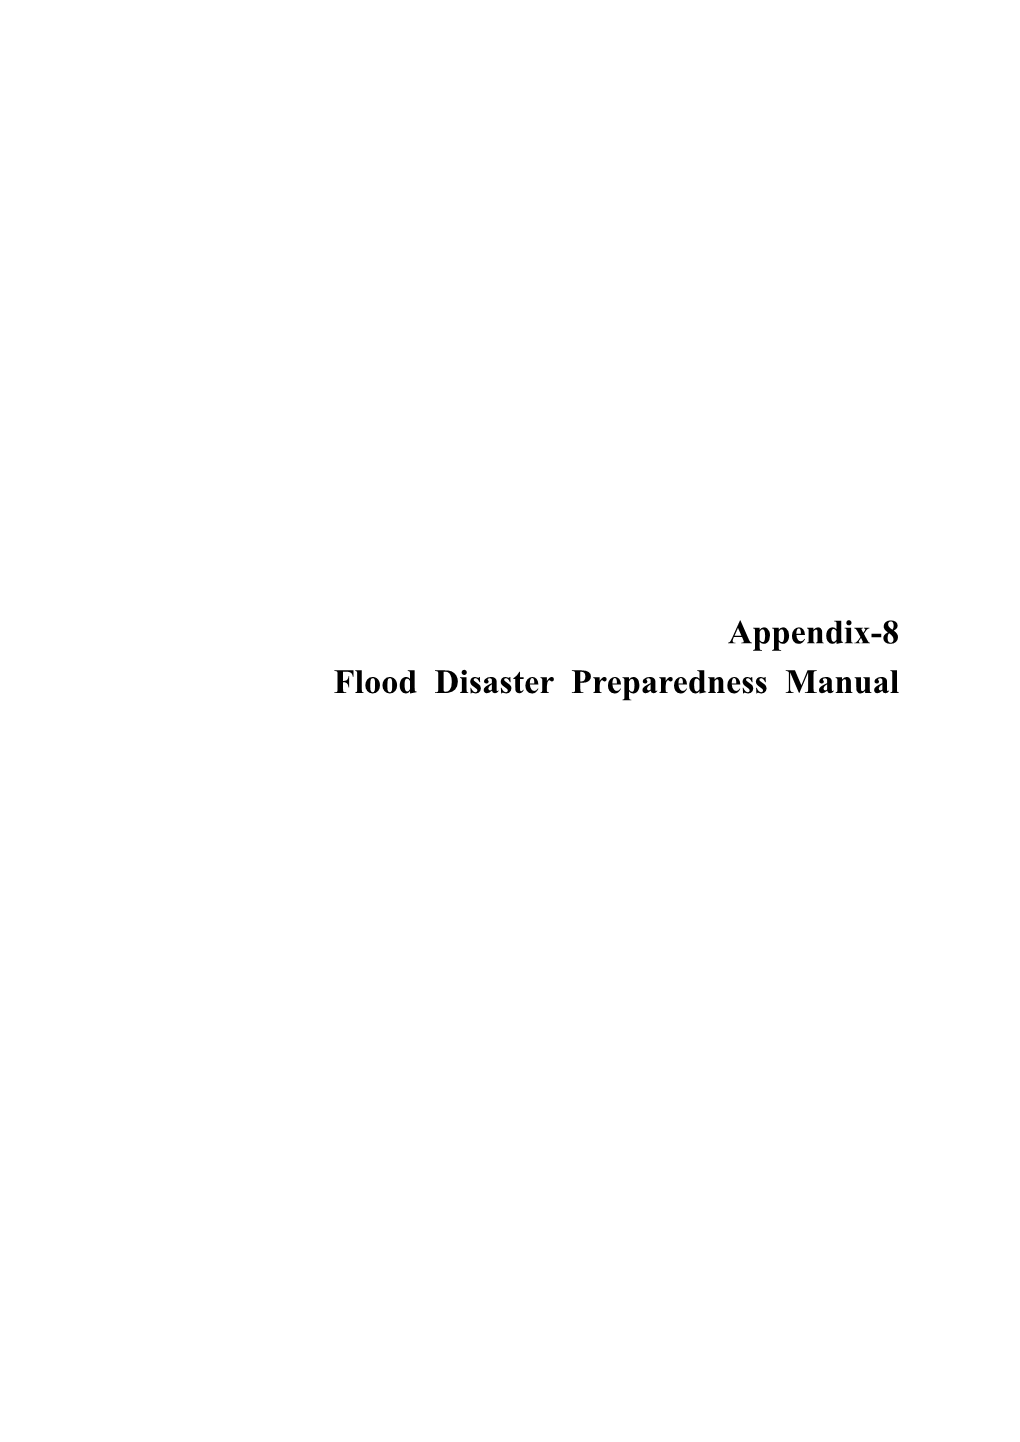 Appendix-8 Flood Disaster Preparedness Manual